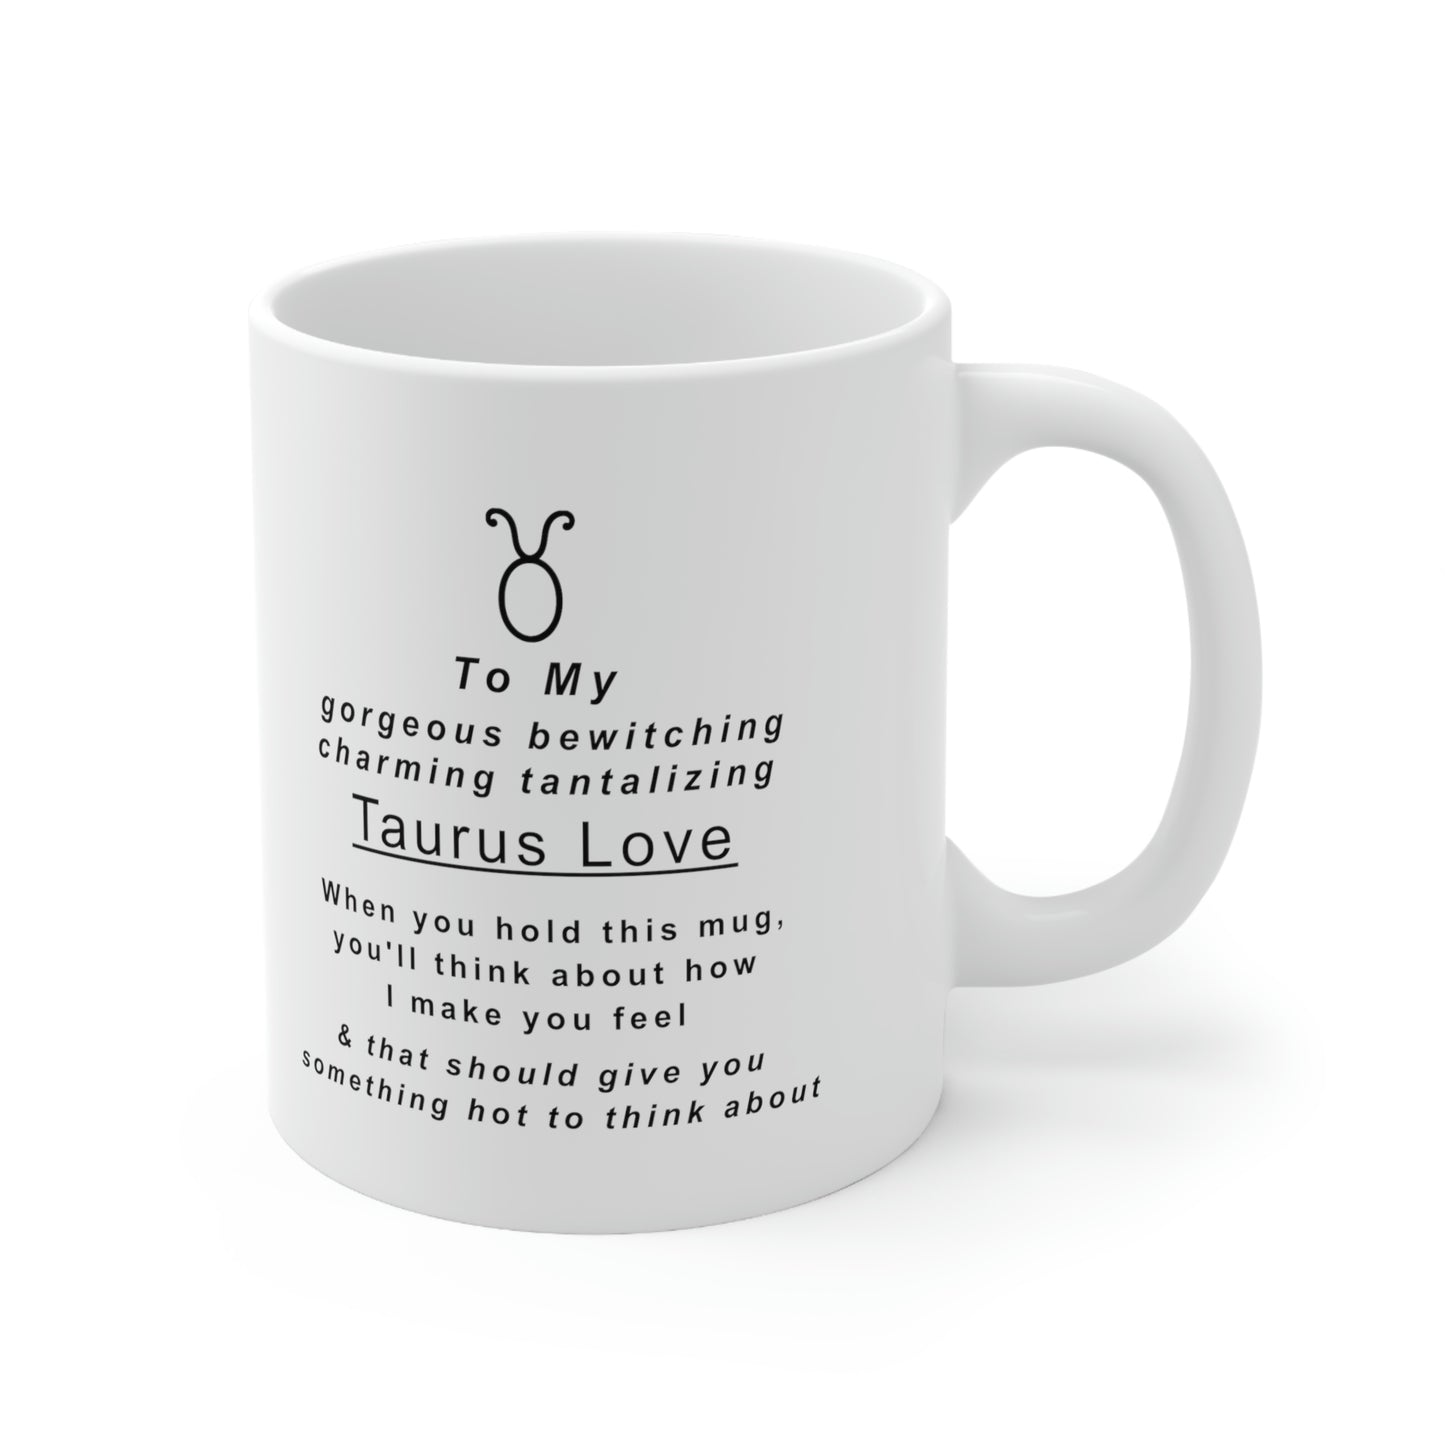 Taurus Mug: "To My Taurus Love" - full text in description